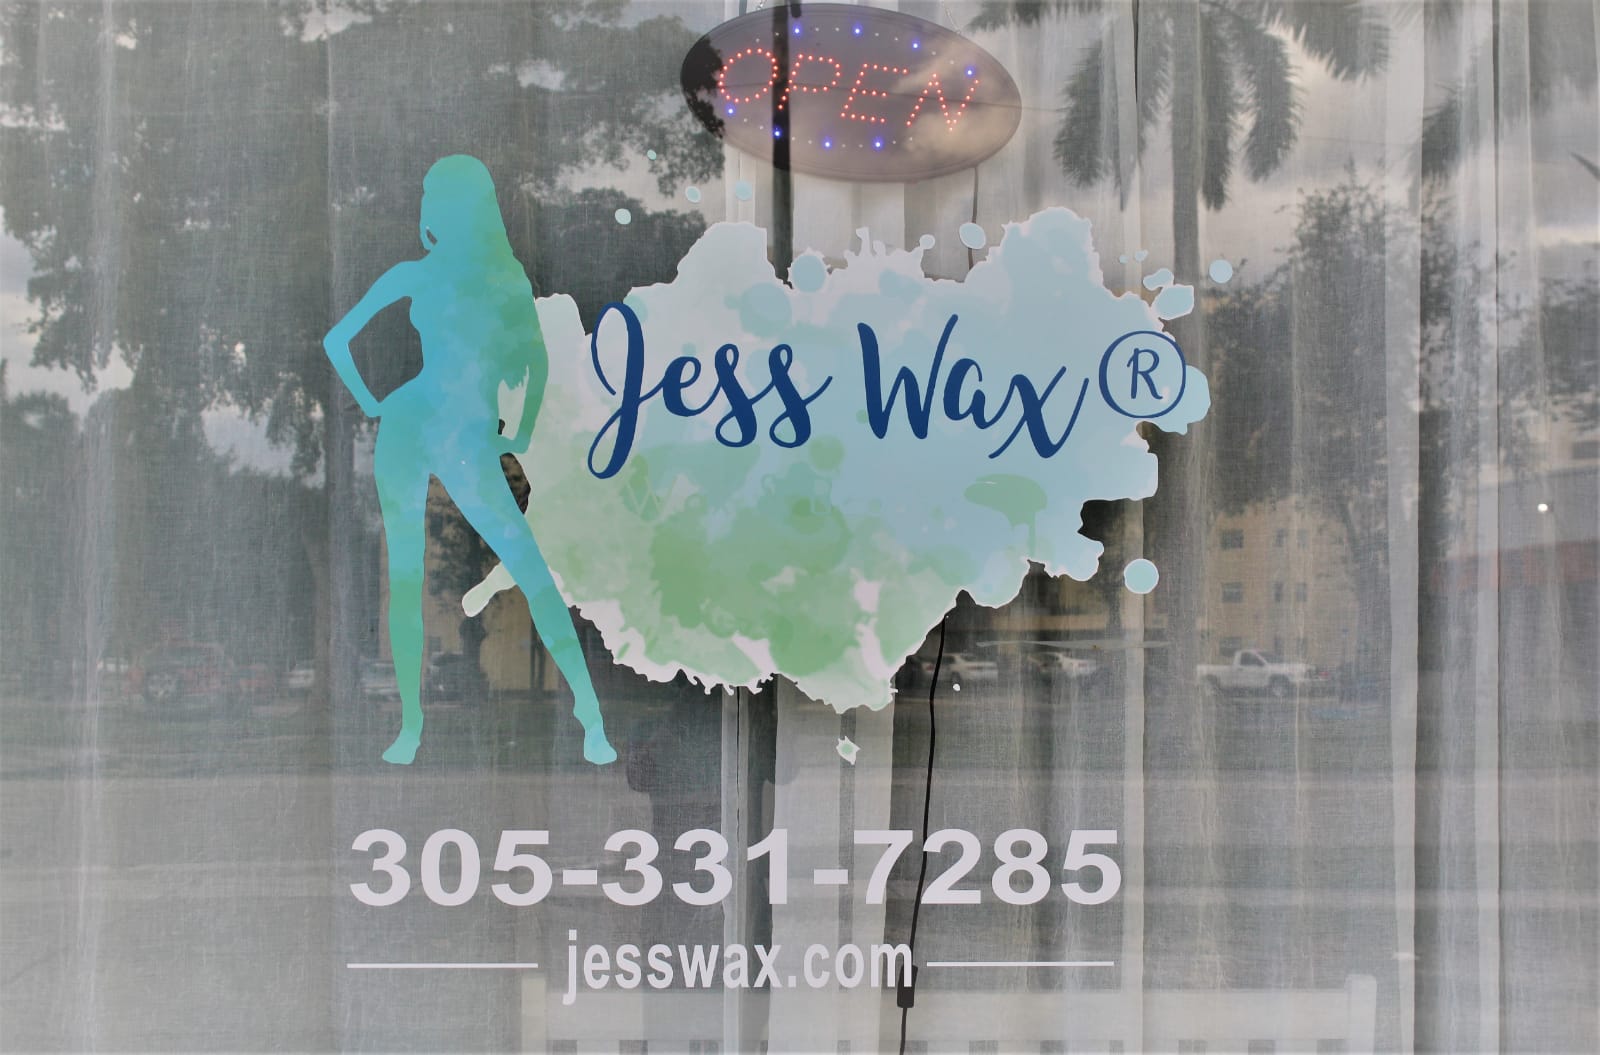 Jess Wax